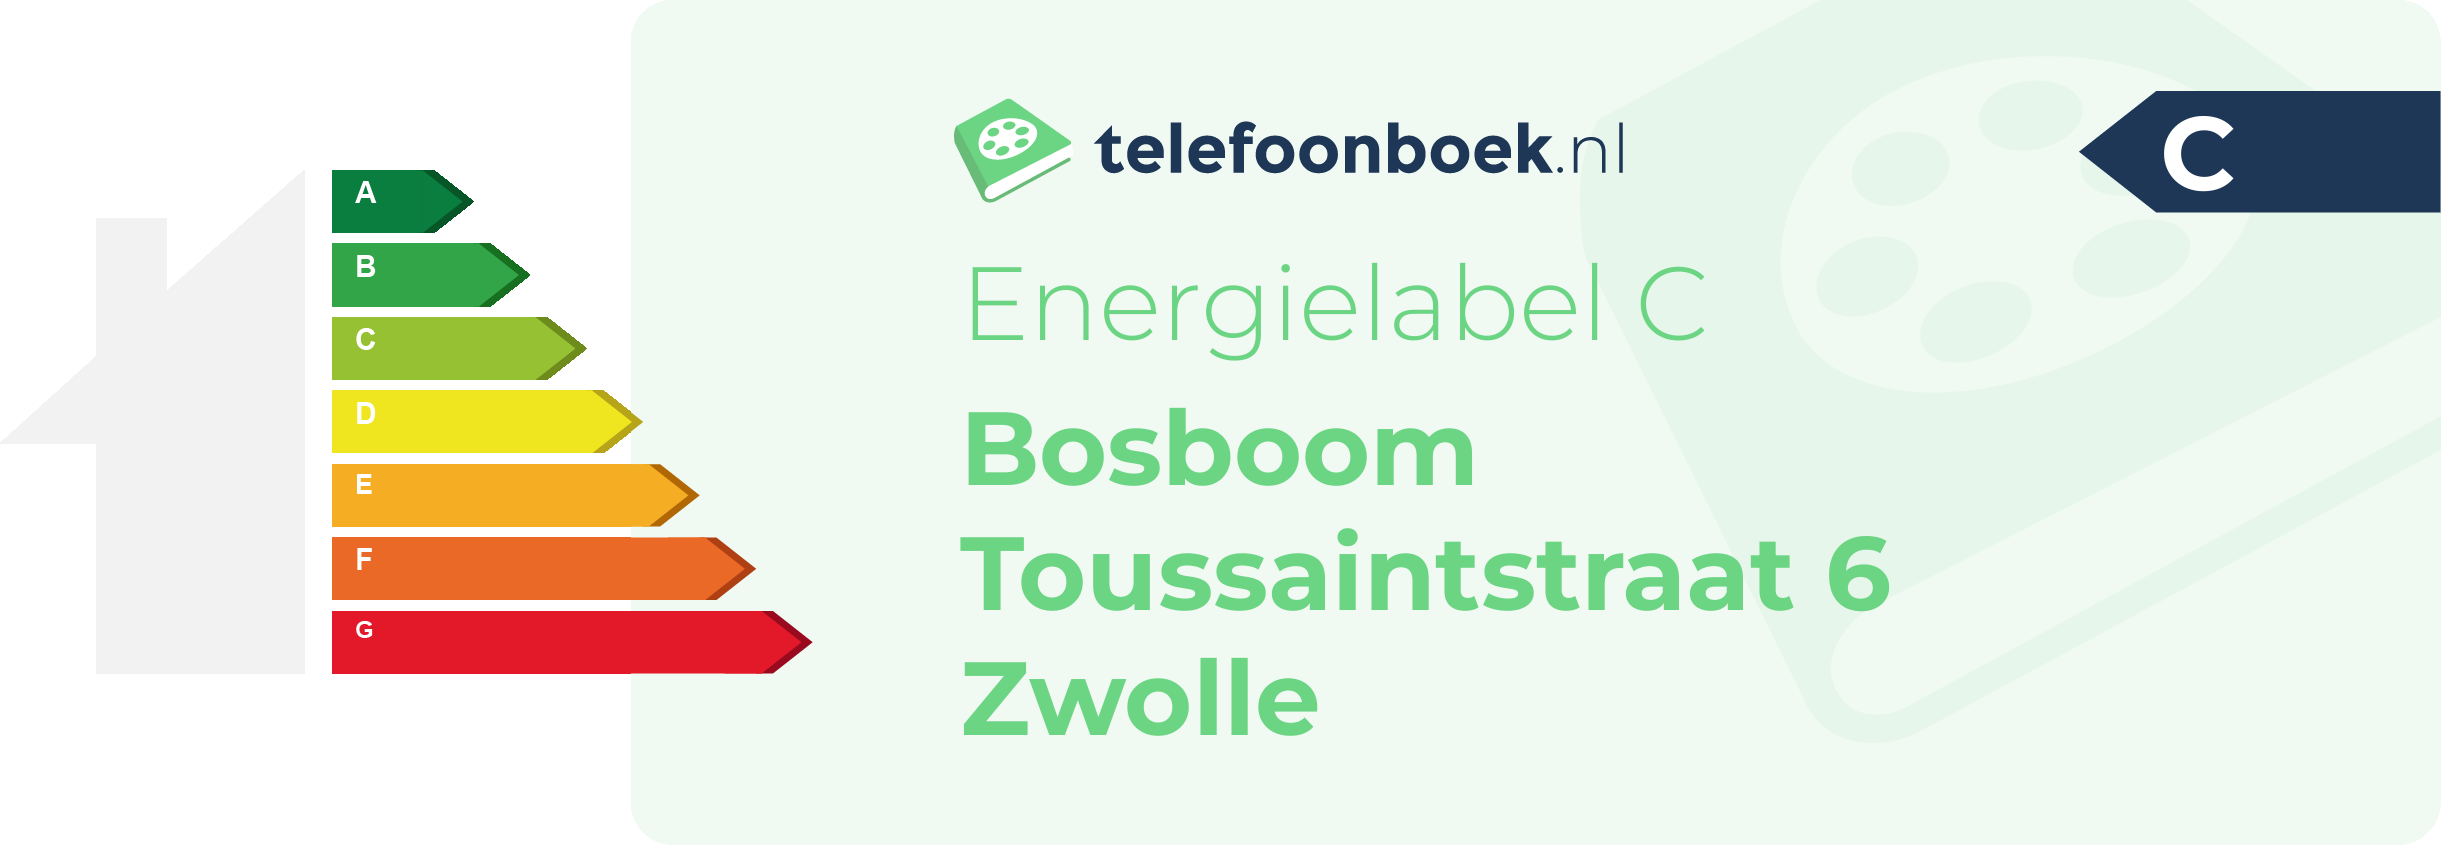 Energielabel Bosboom Toussaintstraat 6 Zwolle